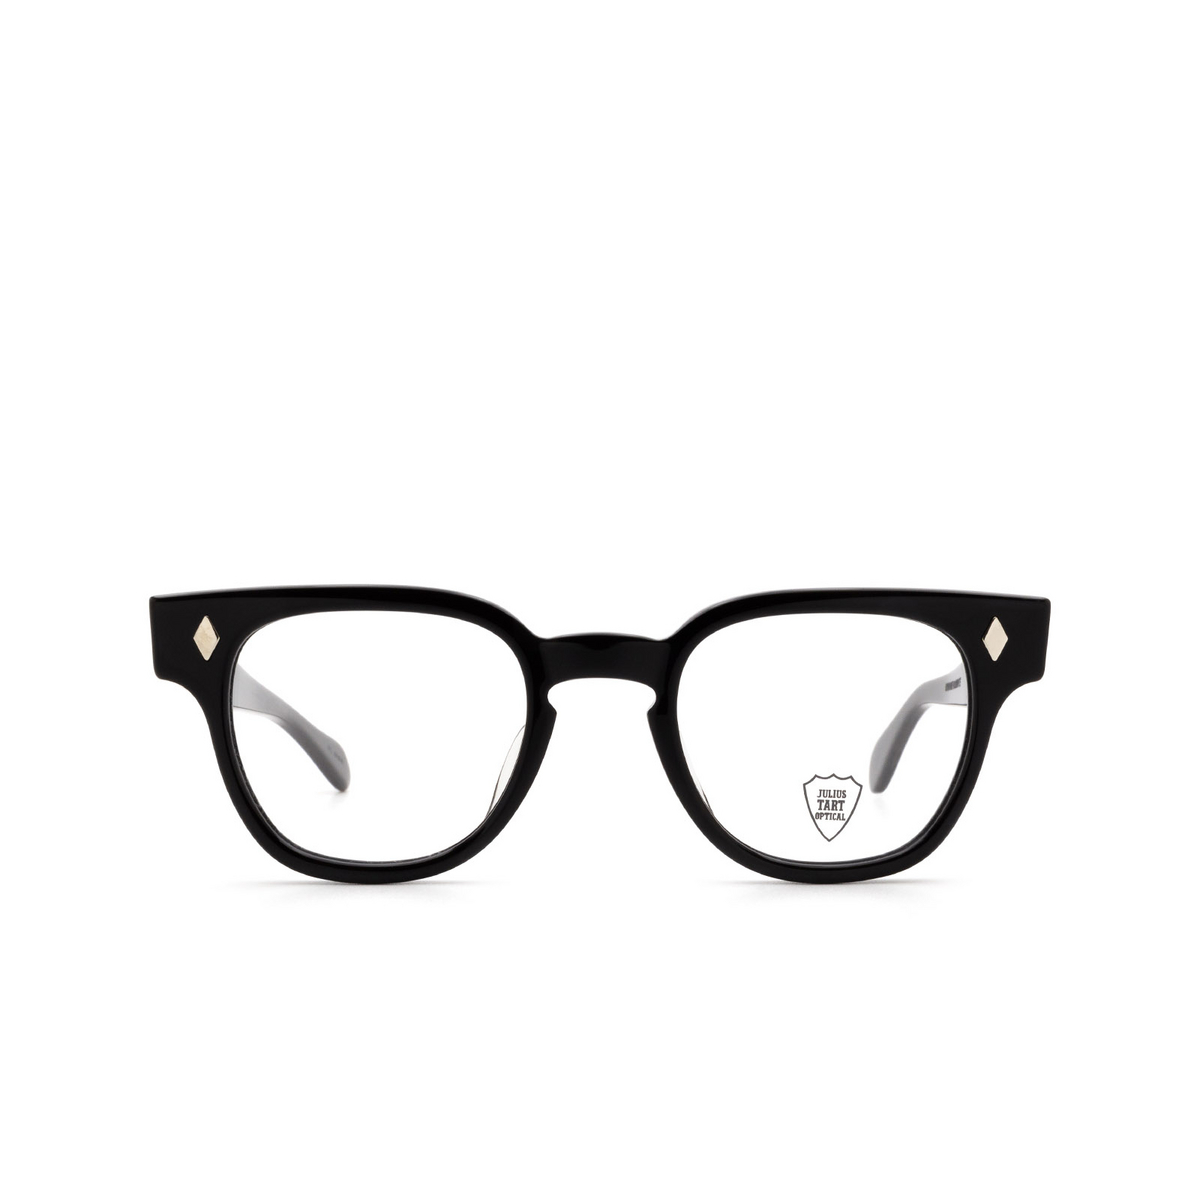 Julius Tart Optical eyeglasses - Mia Burton